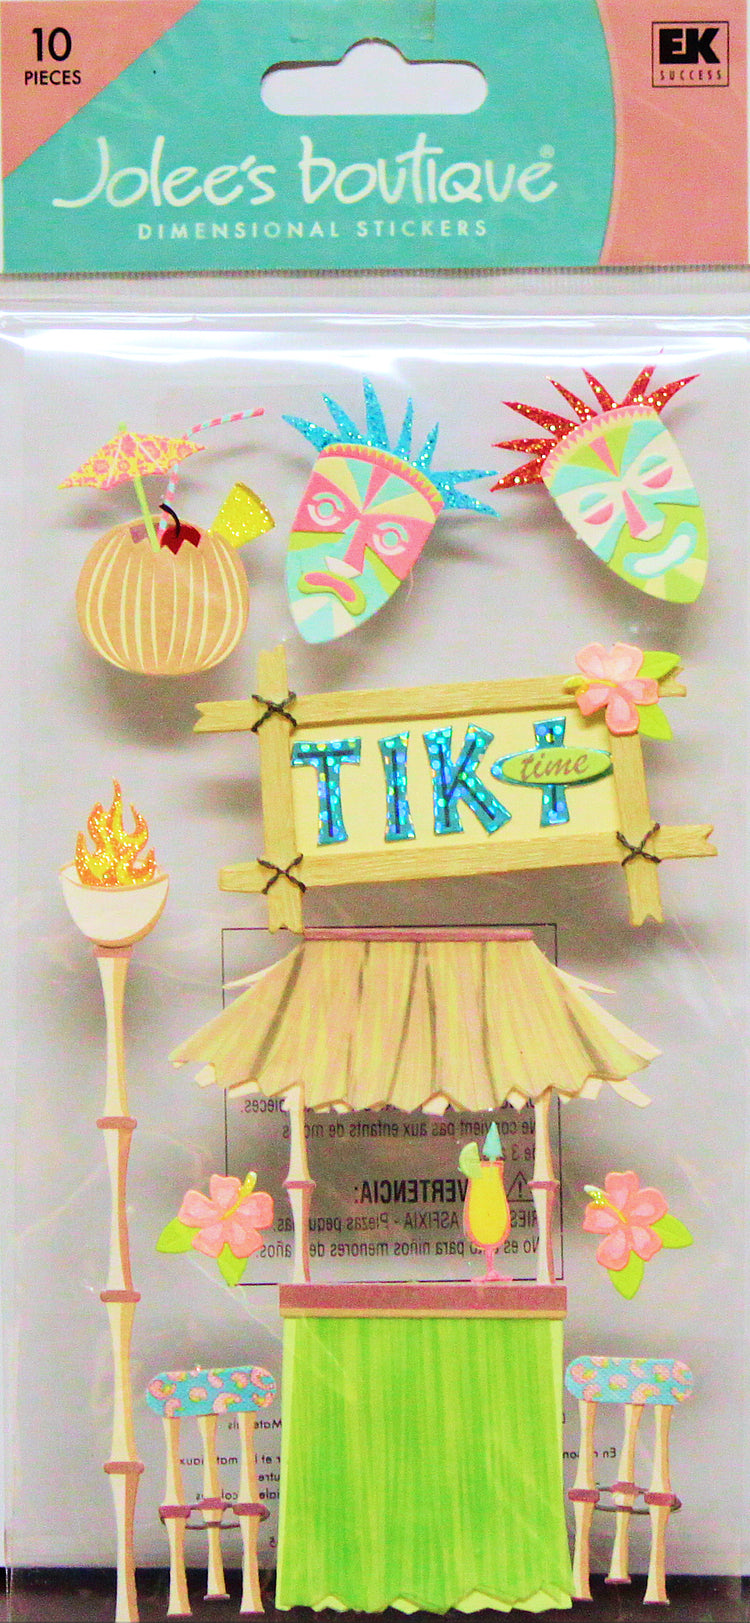 Jolee's Boutique Tiki Time Dimensional Sticker